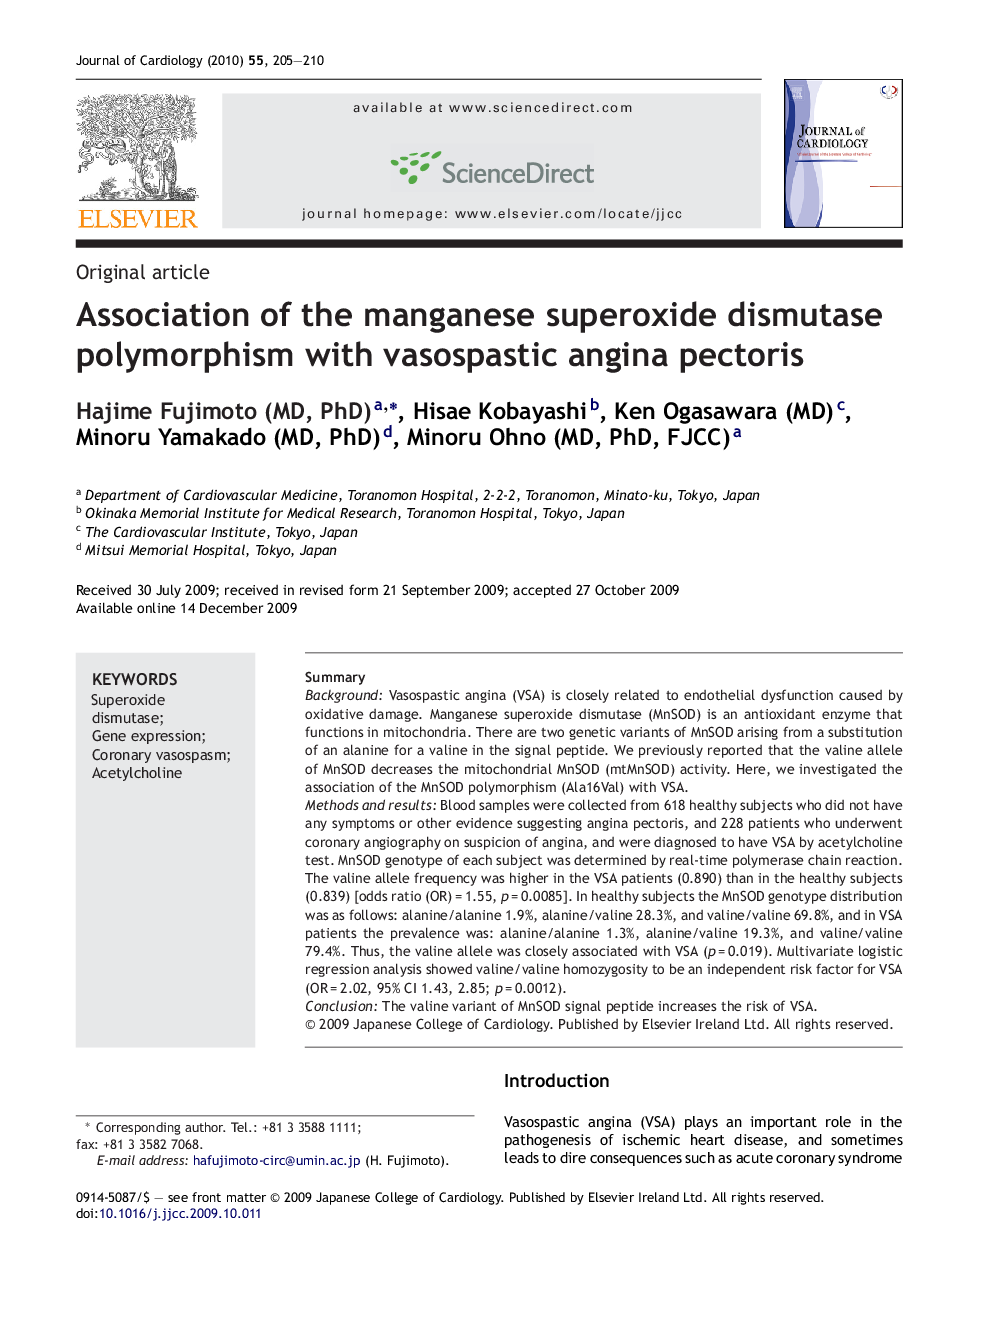 Association of the manganese superoxide dismutase polymorphism with vasospastic angina pectoris